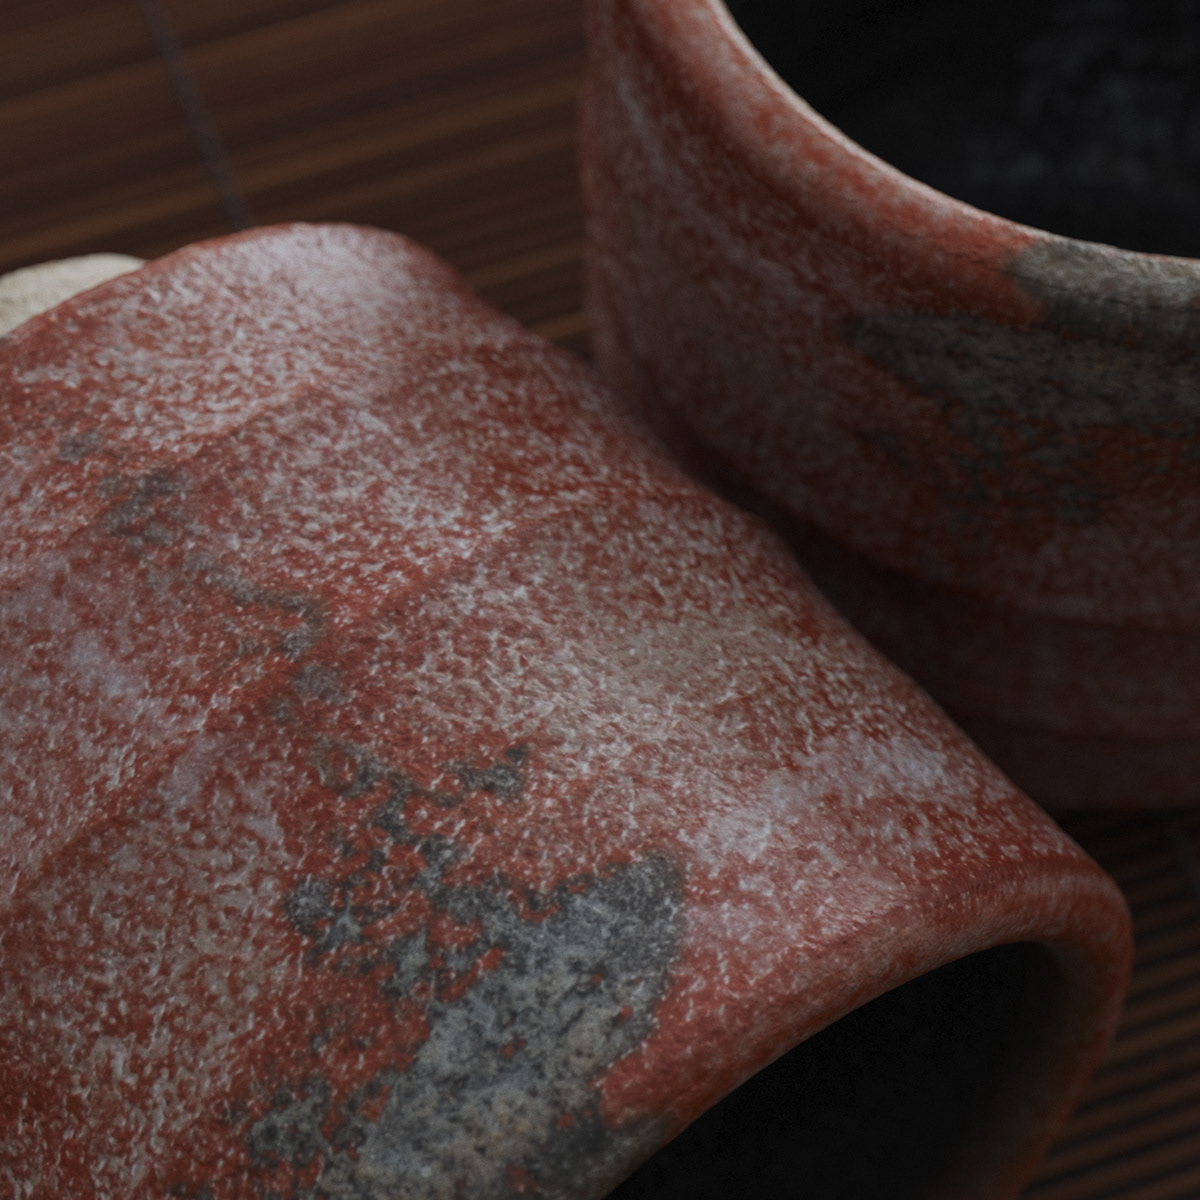 Photogrammetry 3d scan scanning tea cup japanese tea cup Pottery model 3D model ceramics  CGI